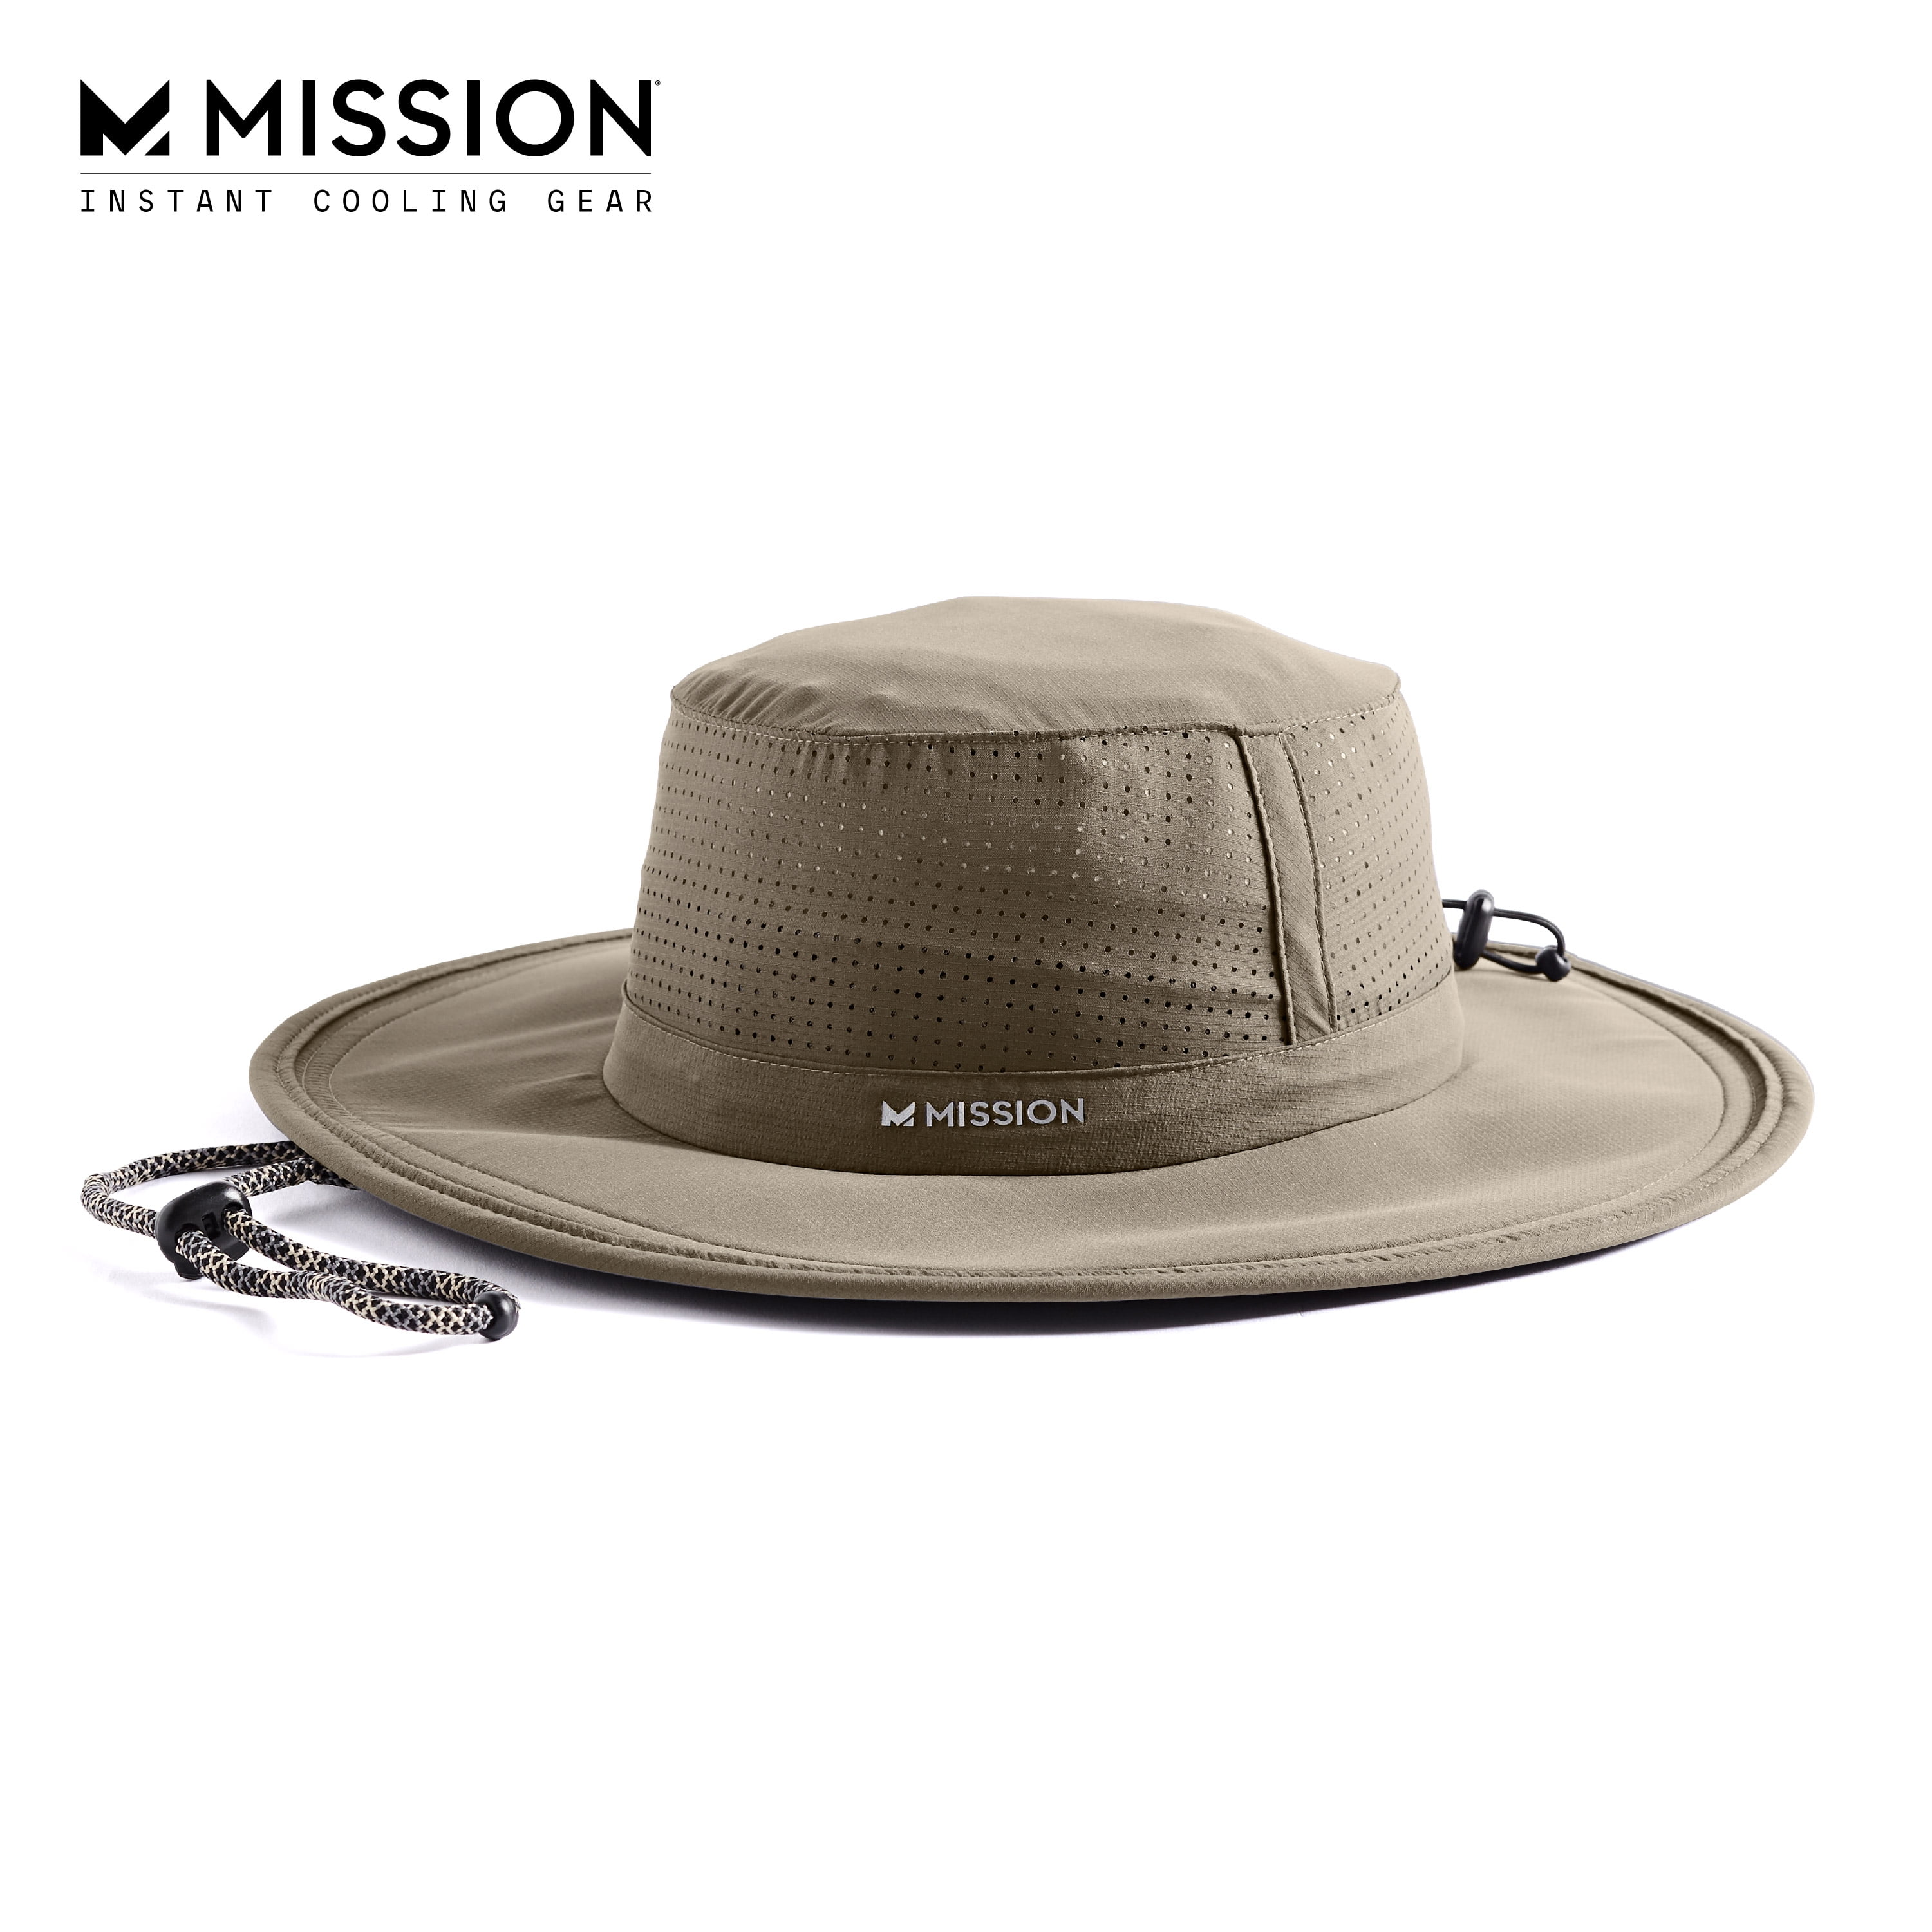 6010502 Cooling Pinnacle Booney Hat, Dark Beige -  Mission